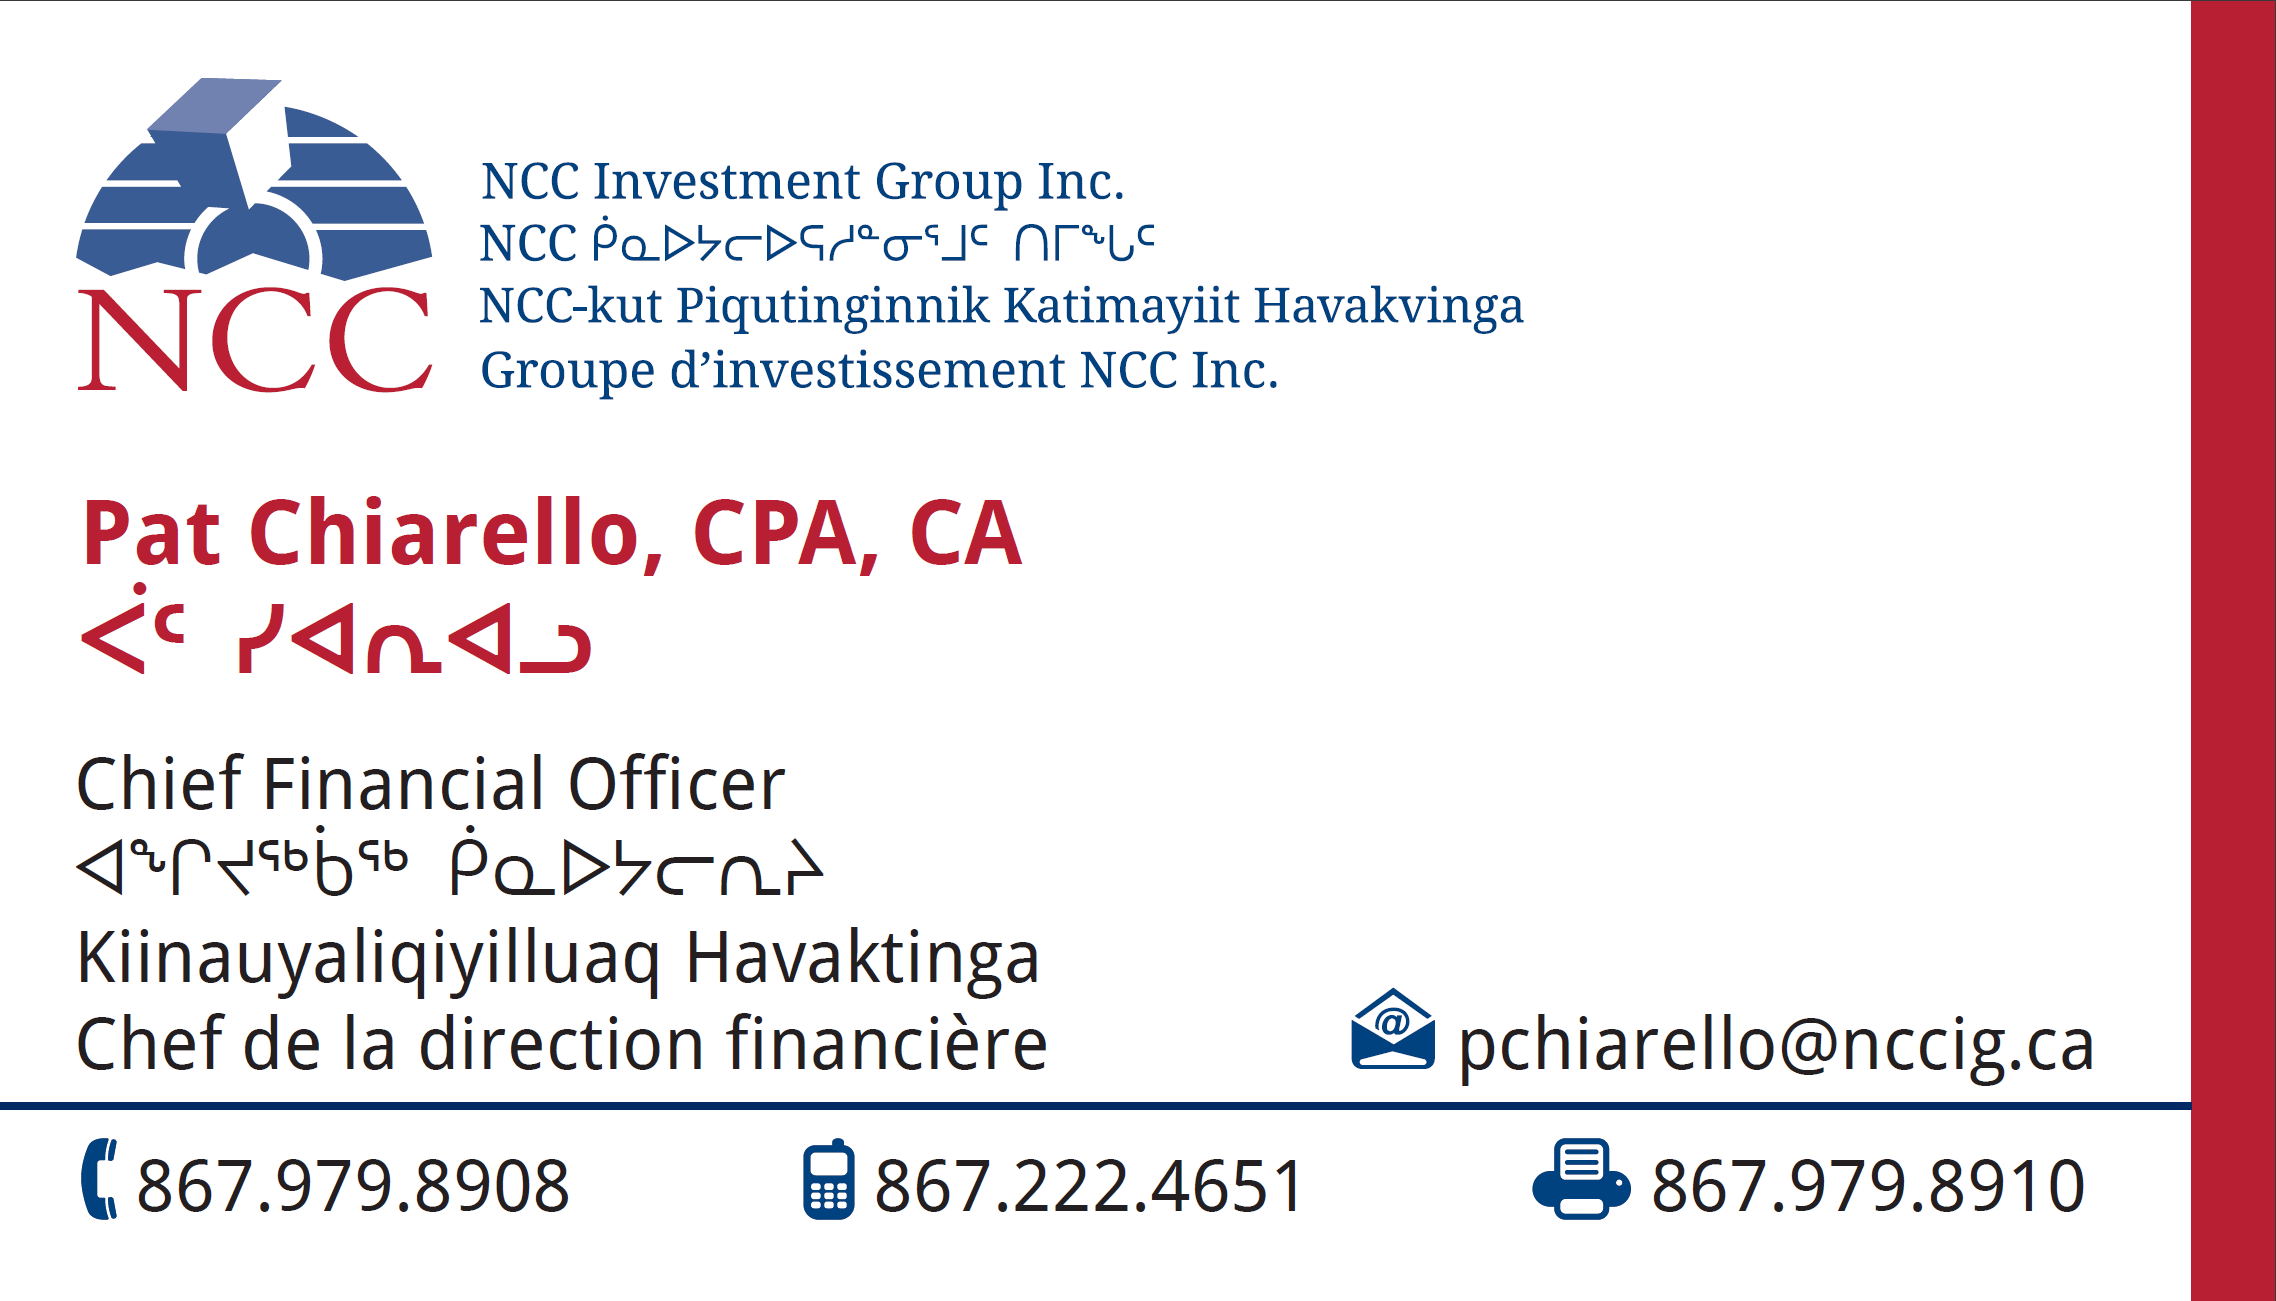 Pat Chiarello - Chief Financial Officer